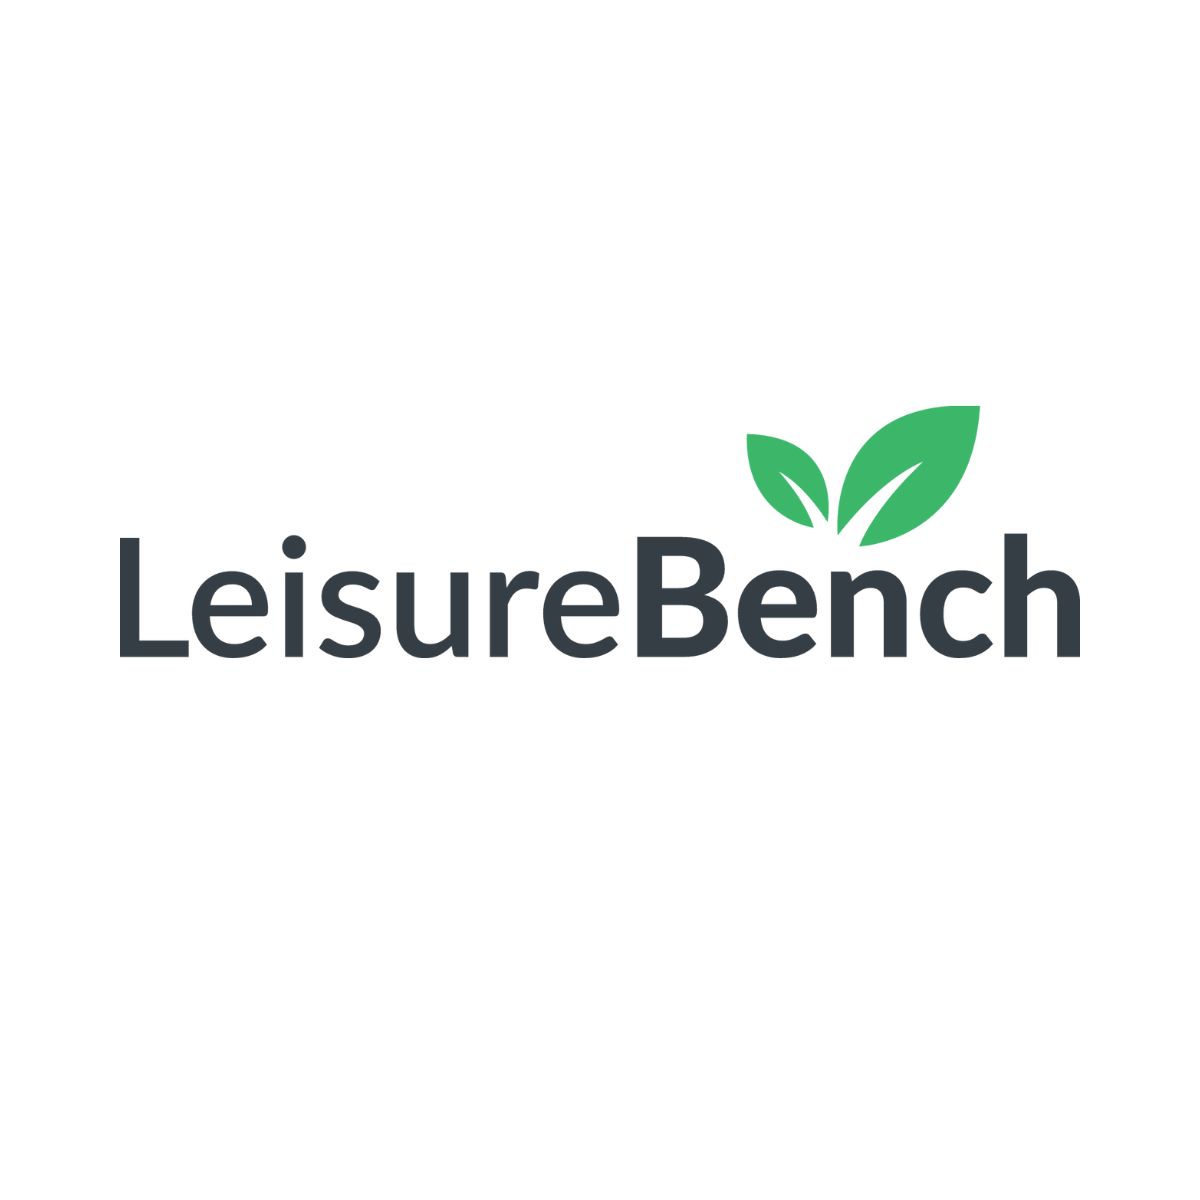 leisure-bench-logo.jpg